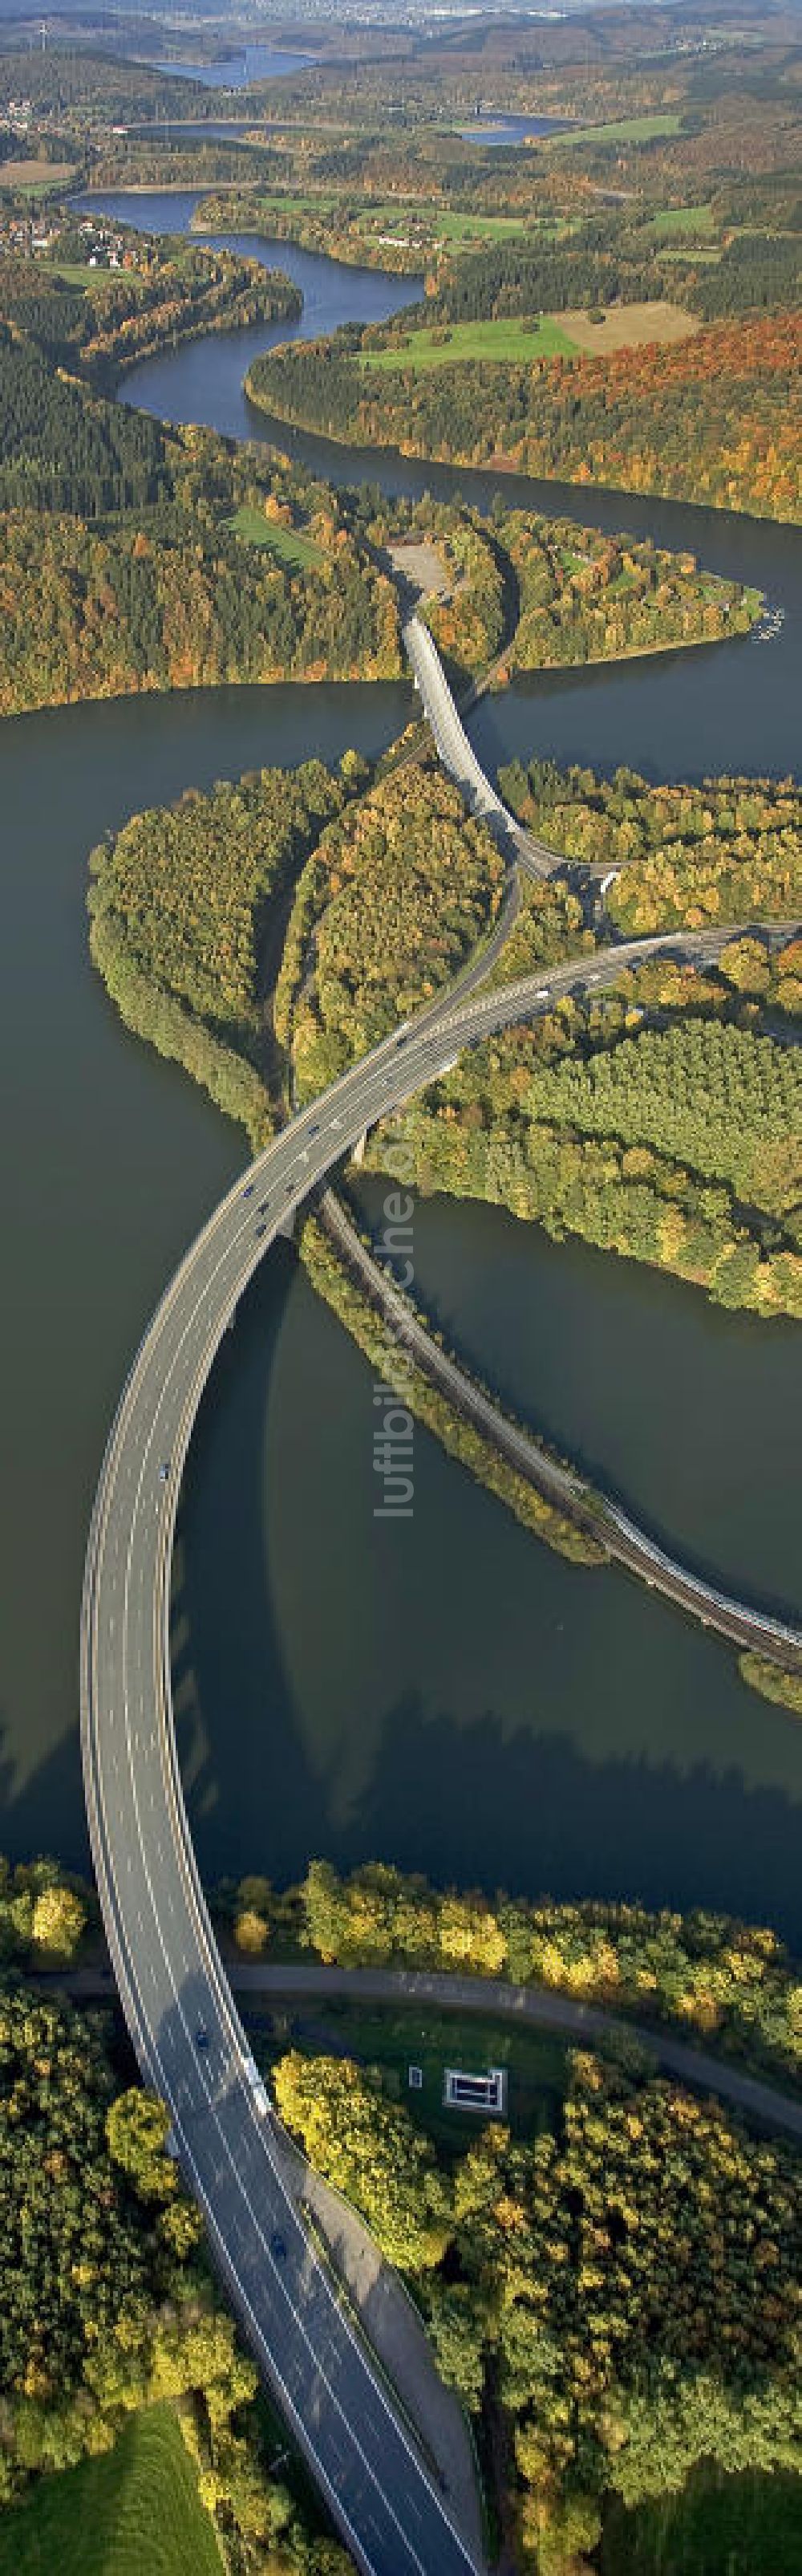 Olpe aus der Vogelperspektive: Brücke der Bundesstraße 55 über den Biggesee